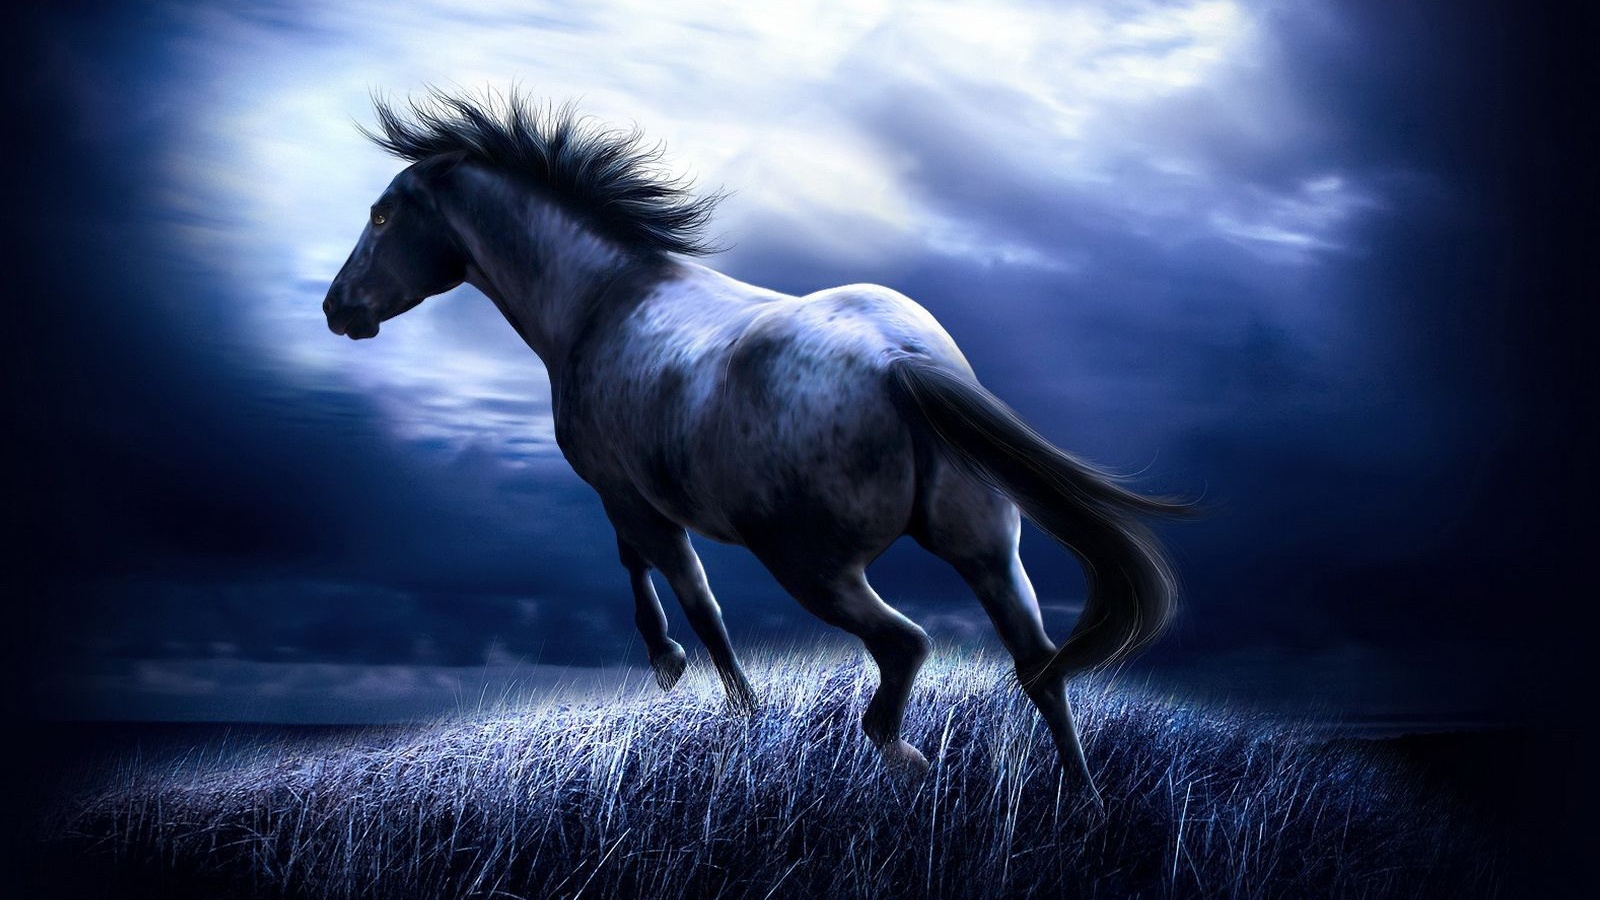 30+] Horse HD Wallpaper 1600x900 - WallpaperSafari